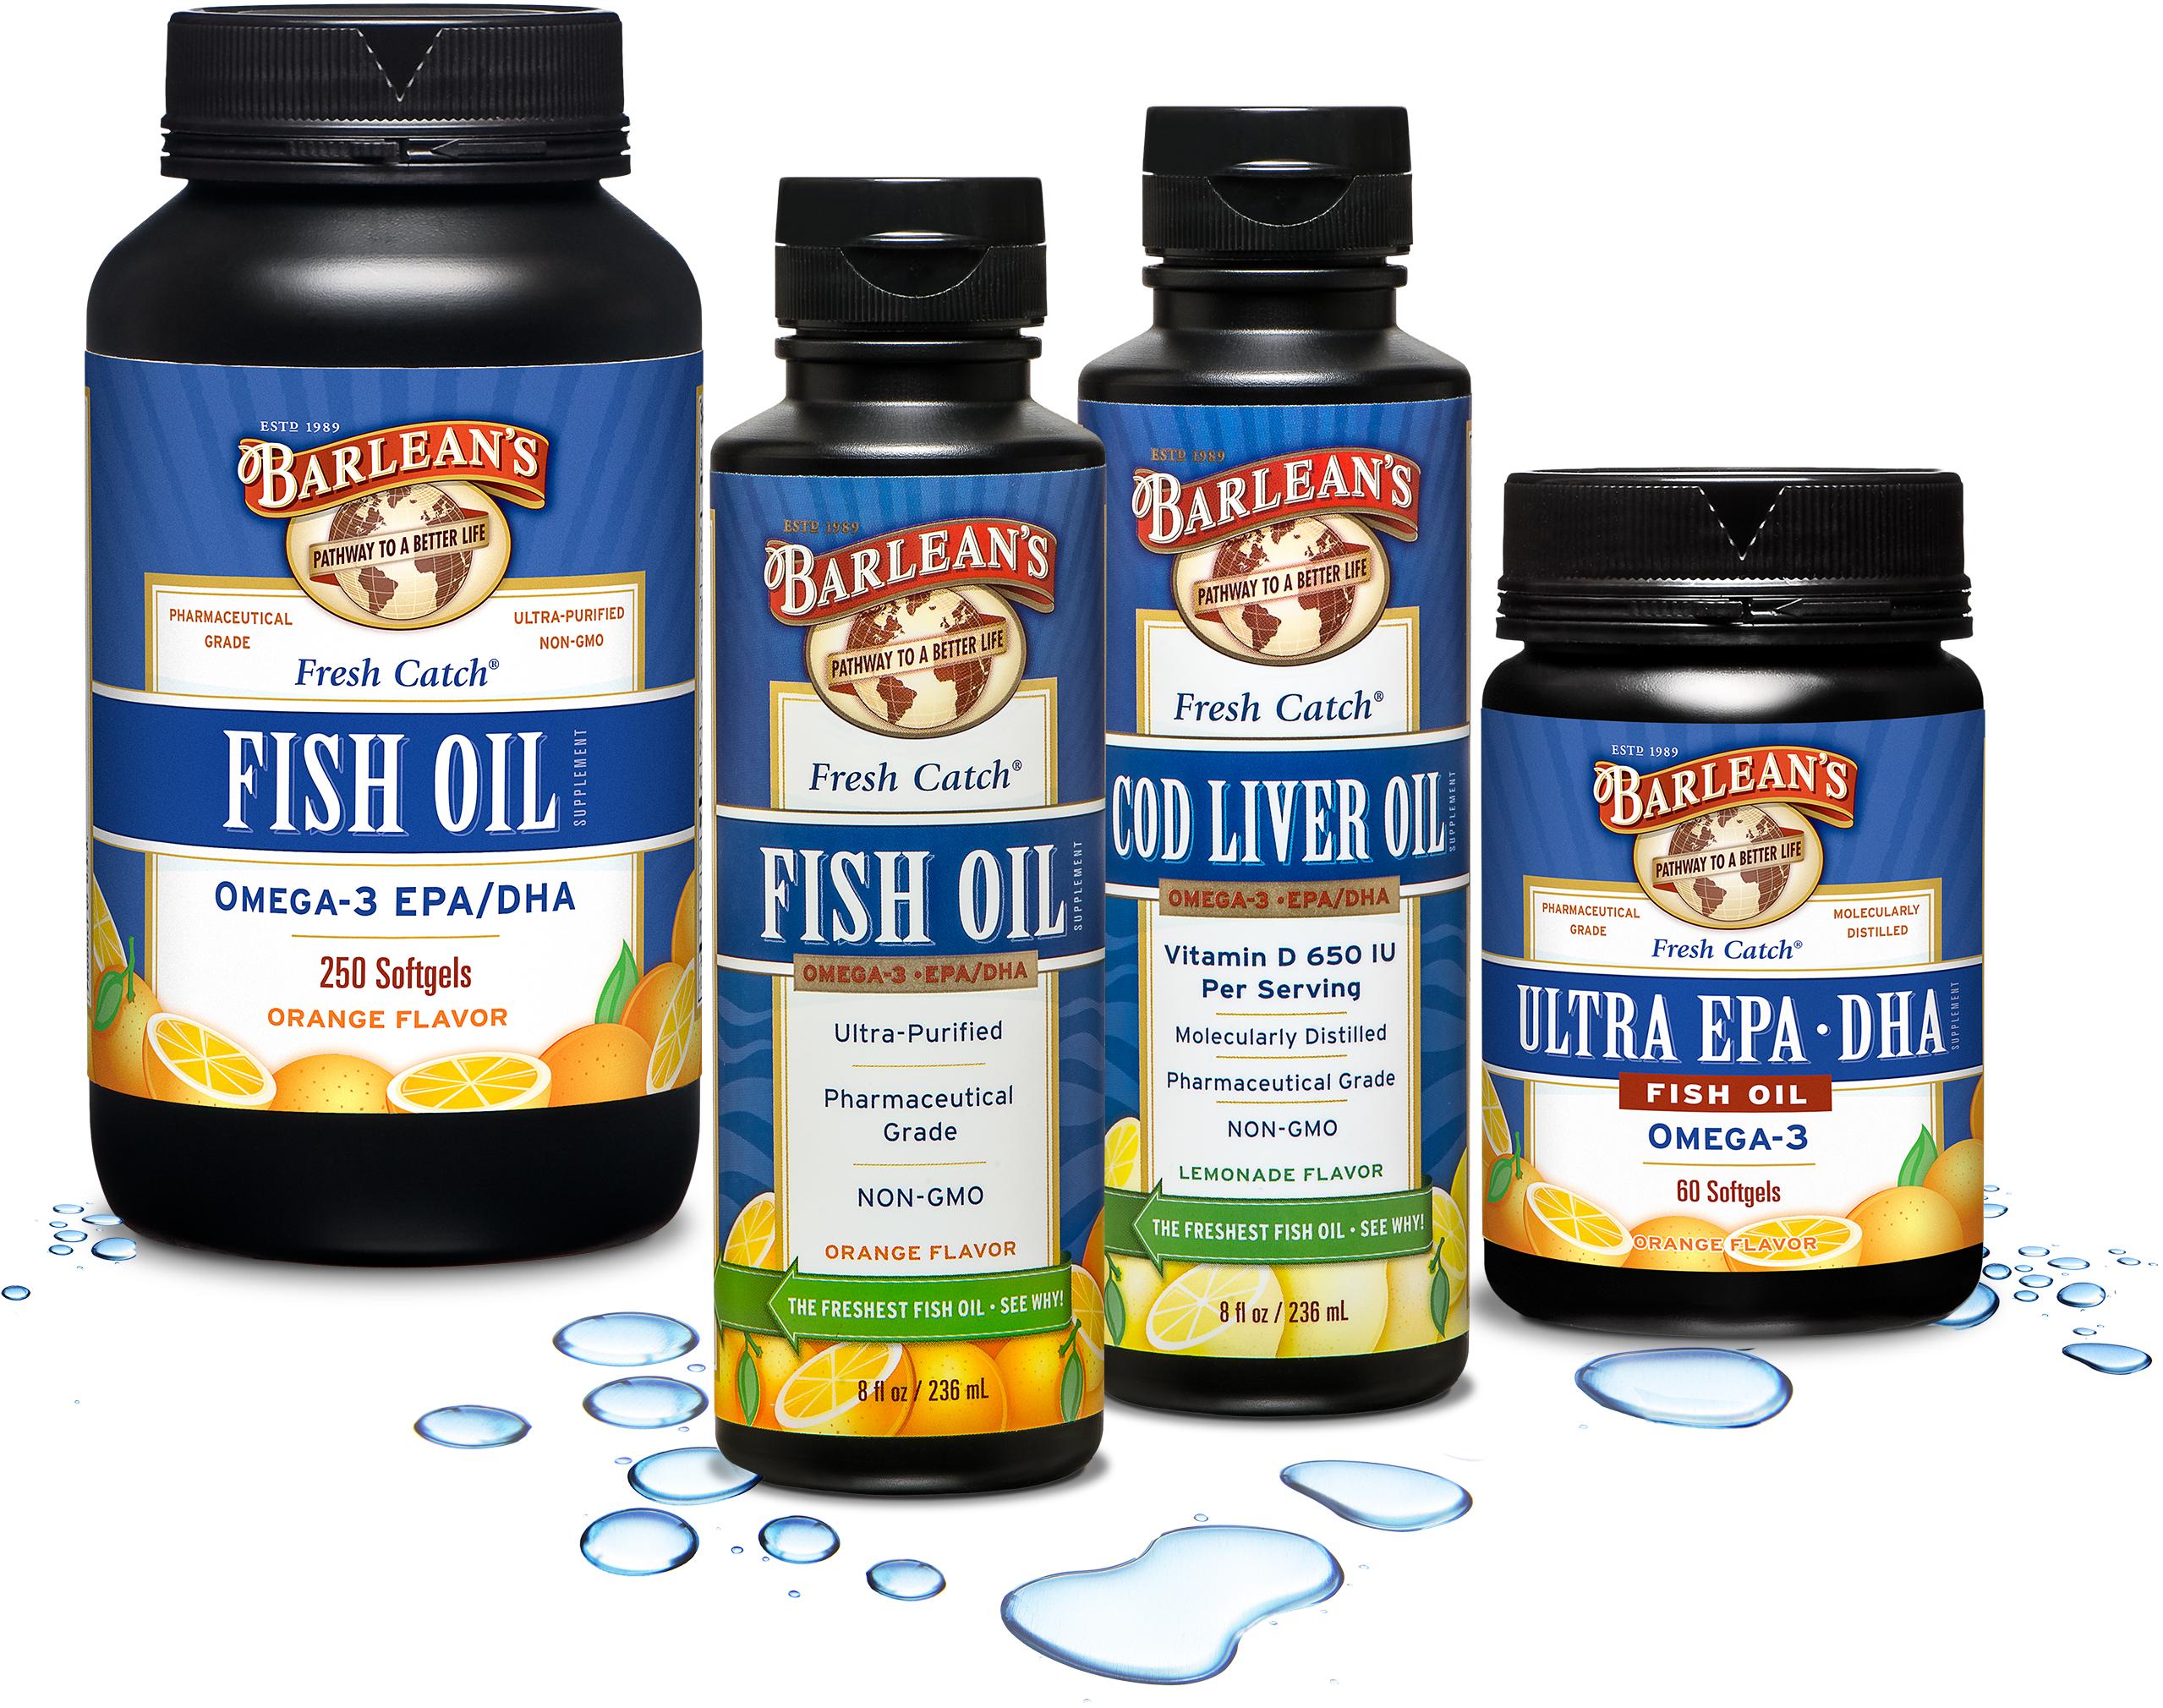 fish oils